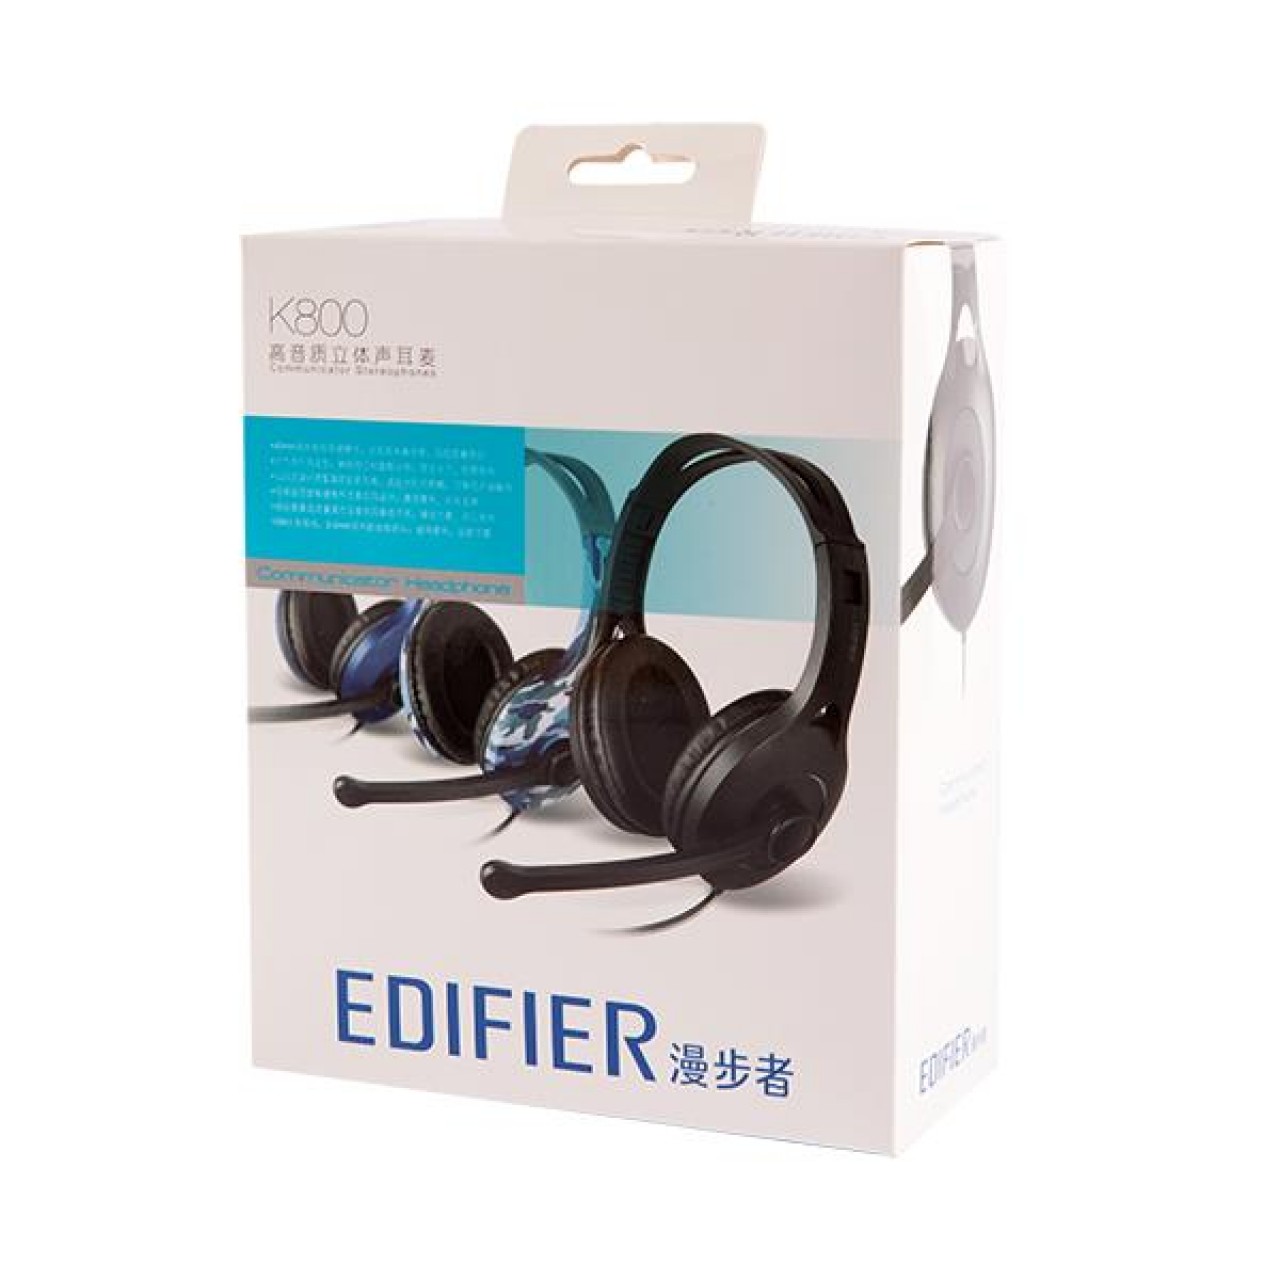 Headphone Edifier USB K800 Black